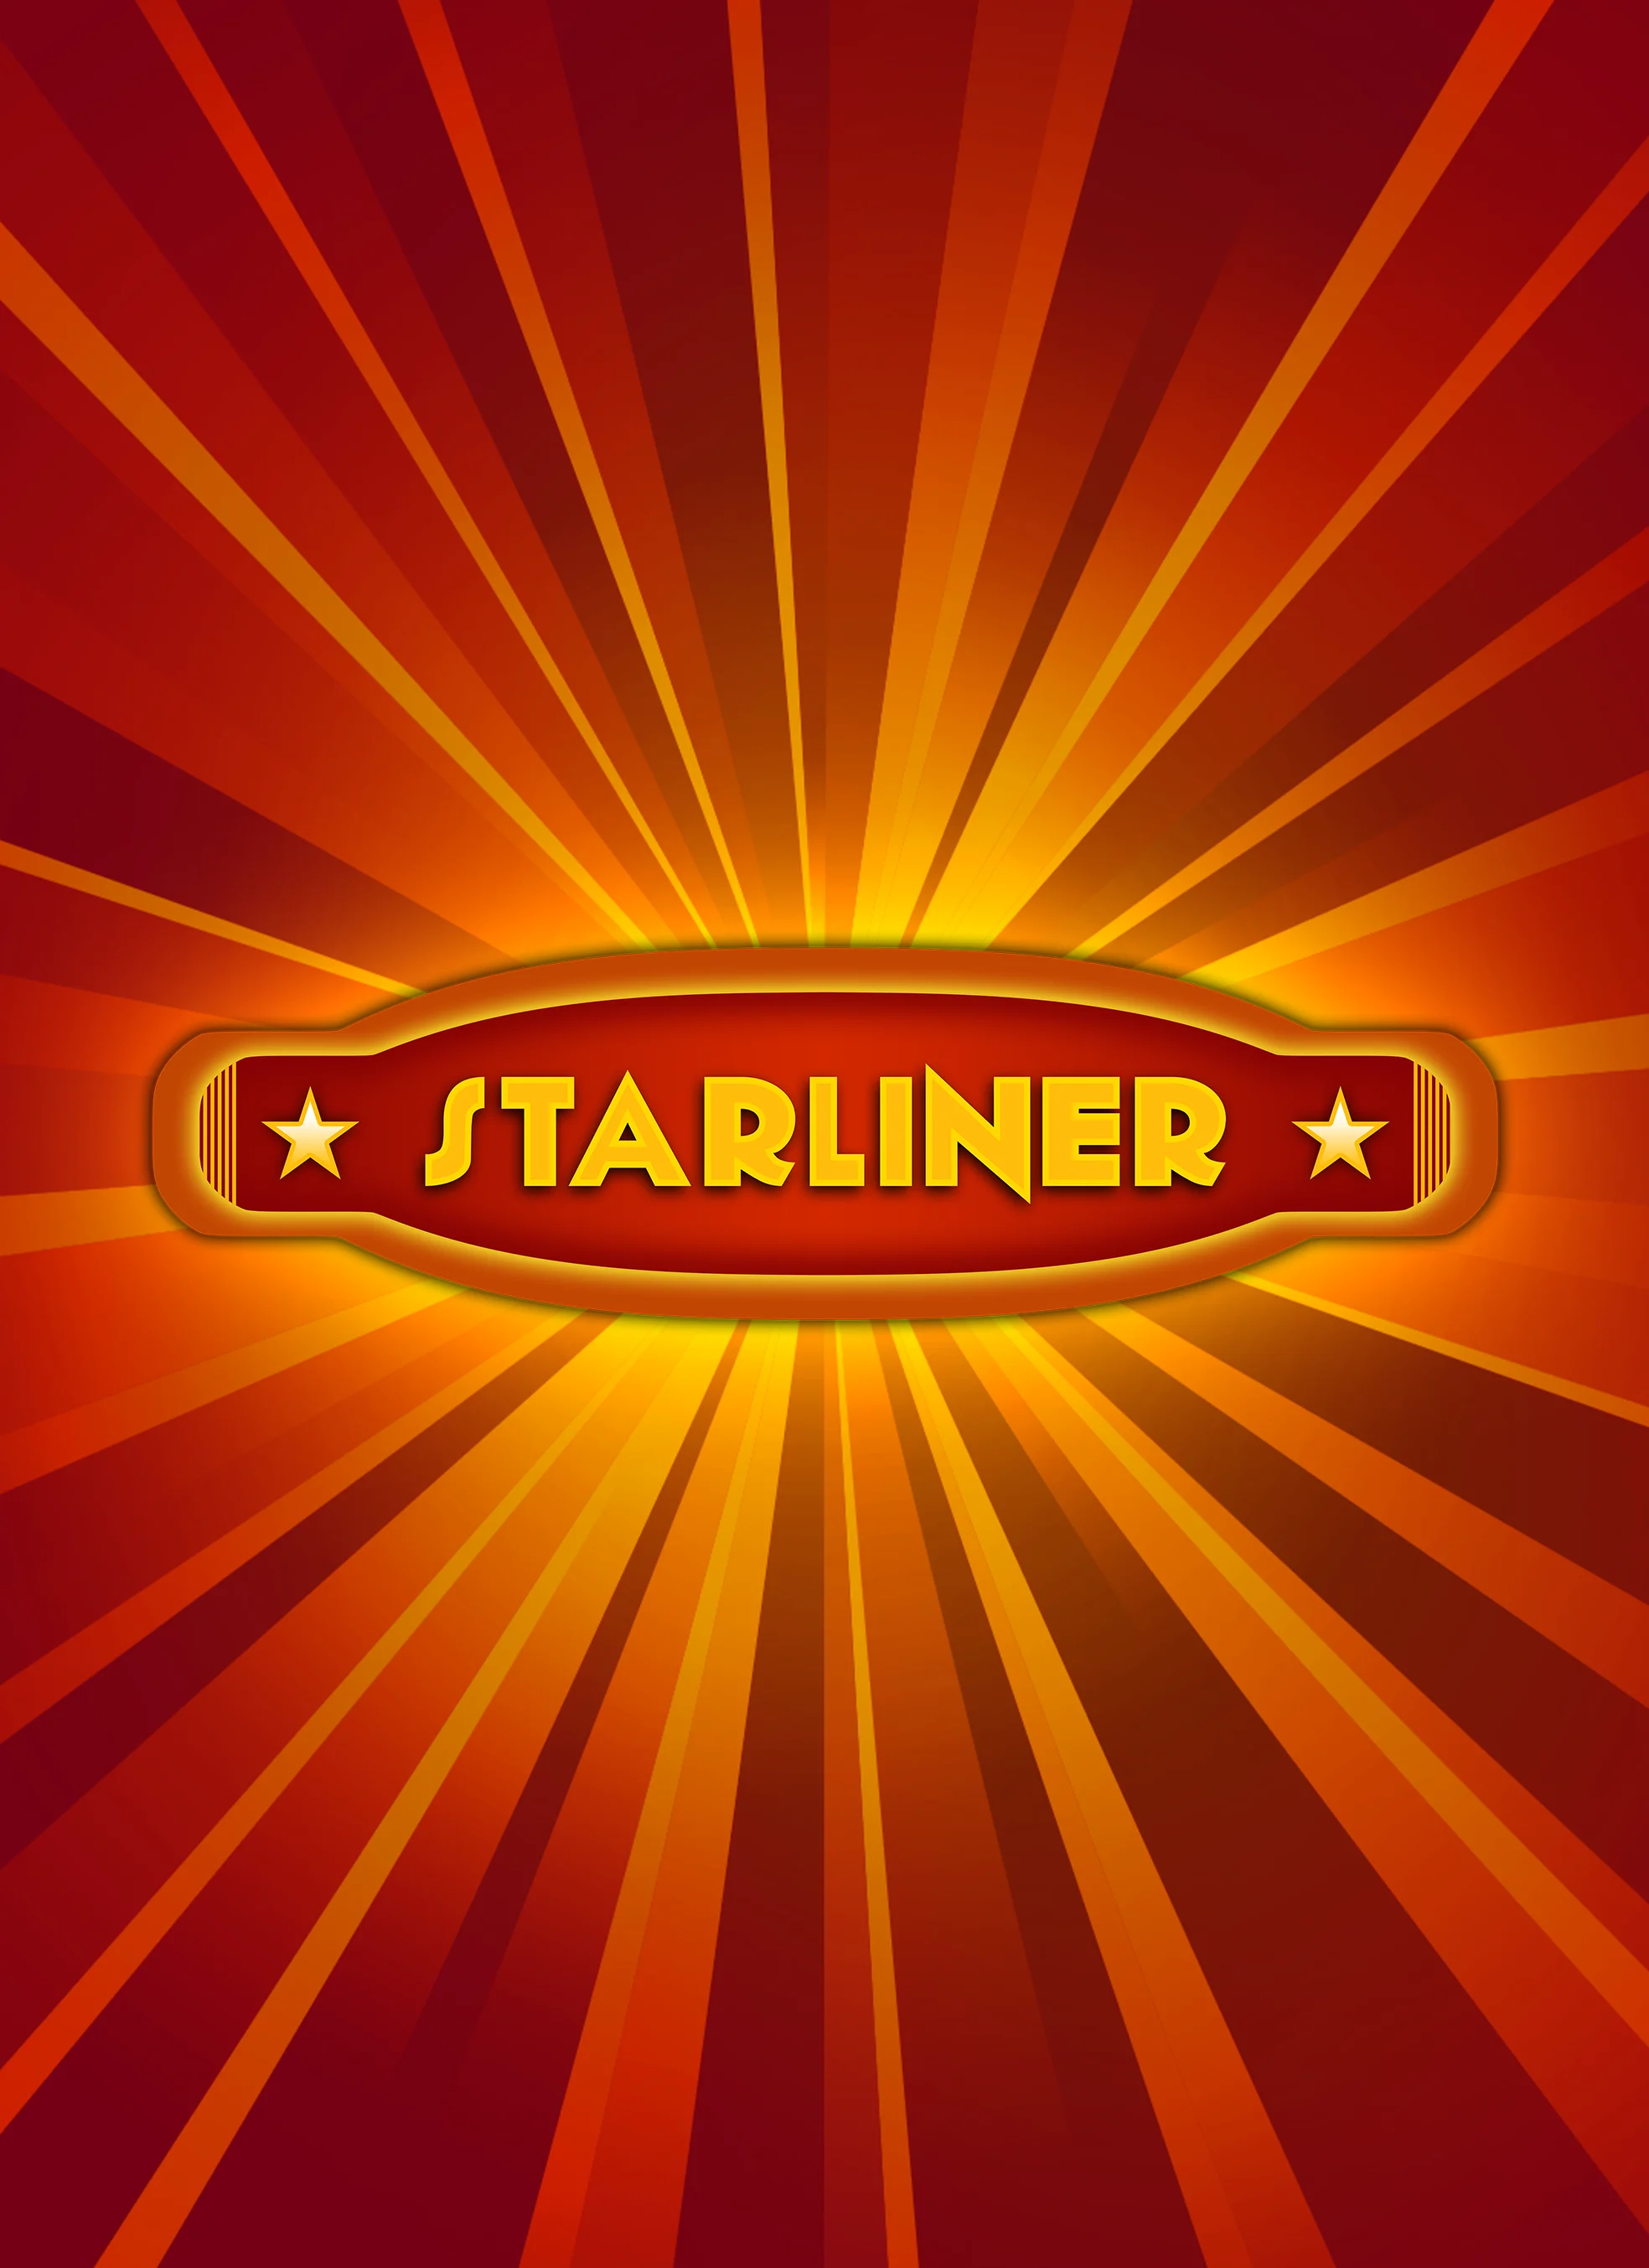 Madisoncasino.be online casino üzerinden Starliner oynayın